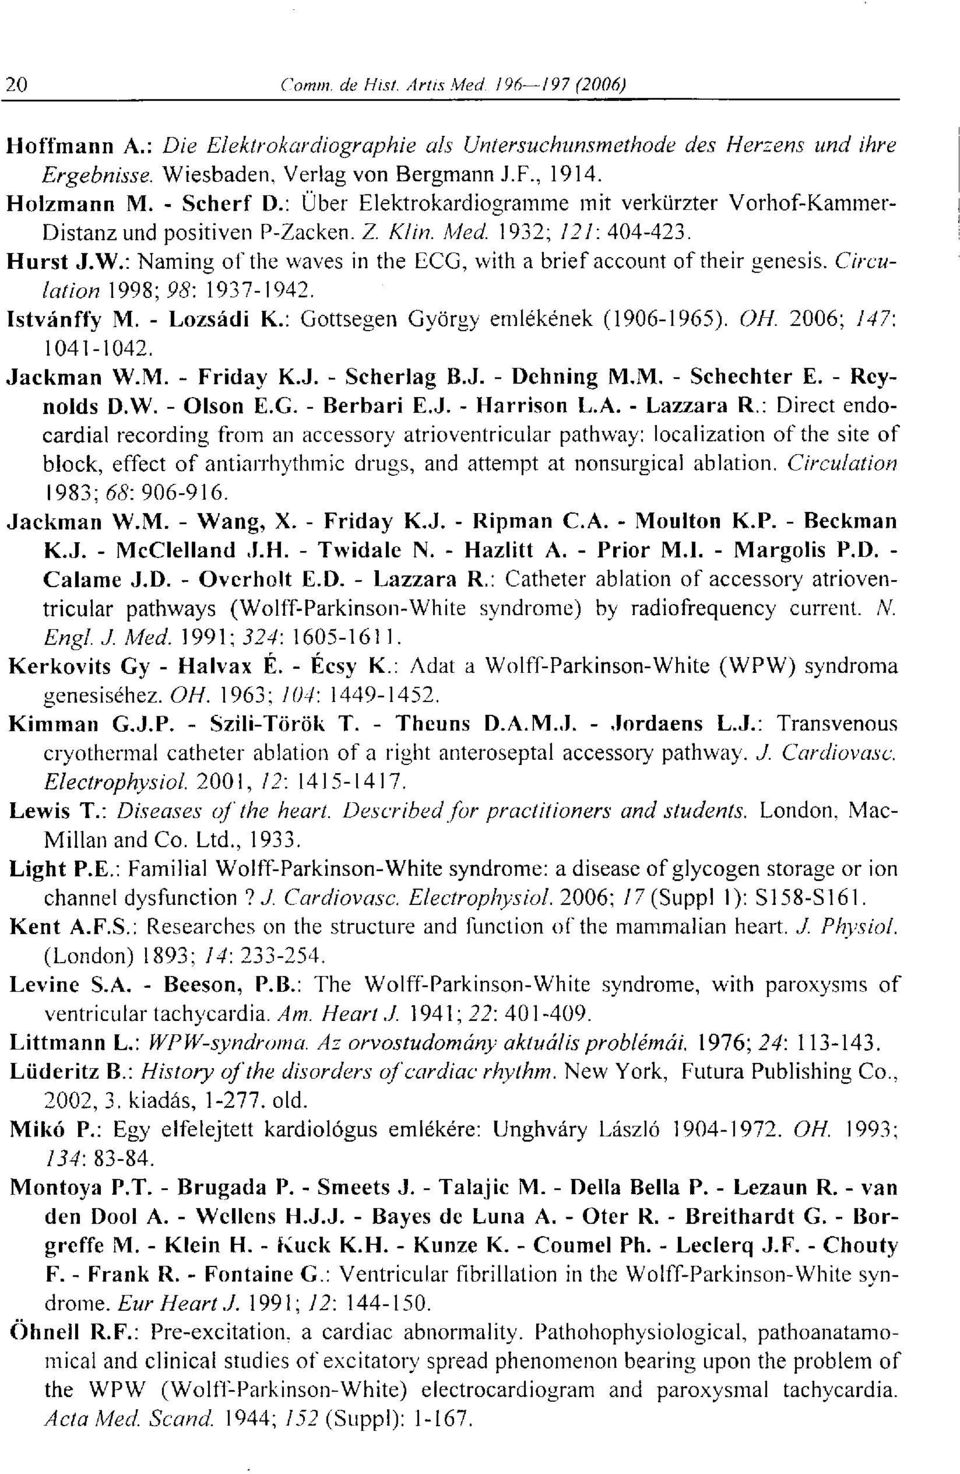 : Naming of the waves in the ECG, with a brief account of their genesis. Circulation 1998; 98: 1937-1942. Istvánffy M. - Lozsádi K.: Gottsegen György emlékének (1906-1965). OH. 2006; 147: 1041-1042.